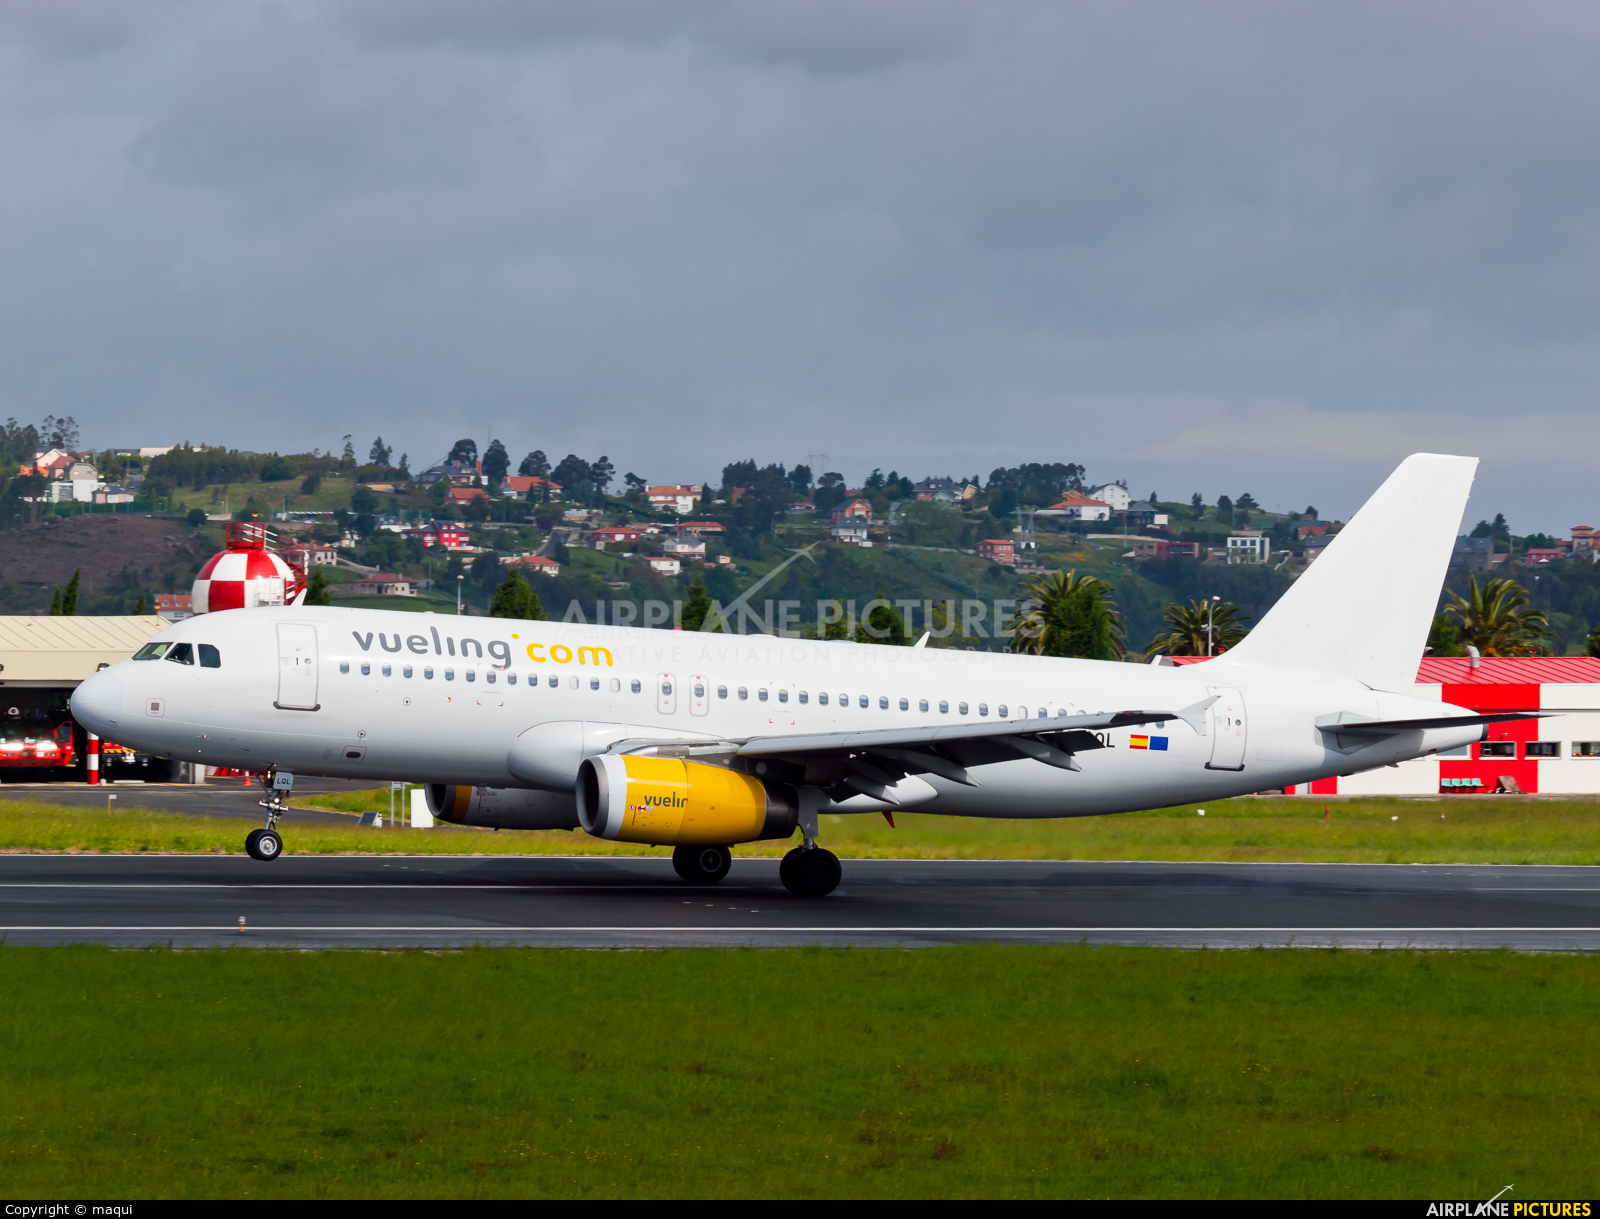 Vueling Airlines EC-LQL aircraft at La Coruña